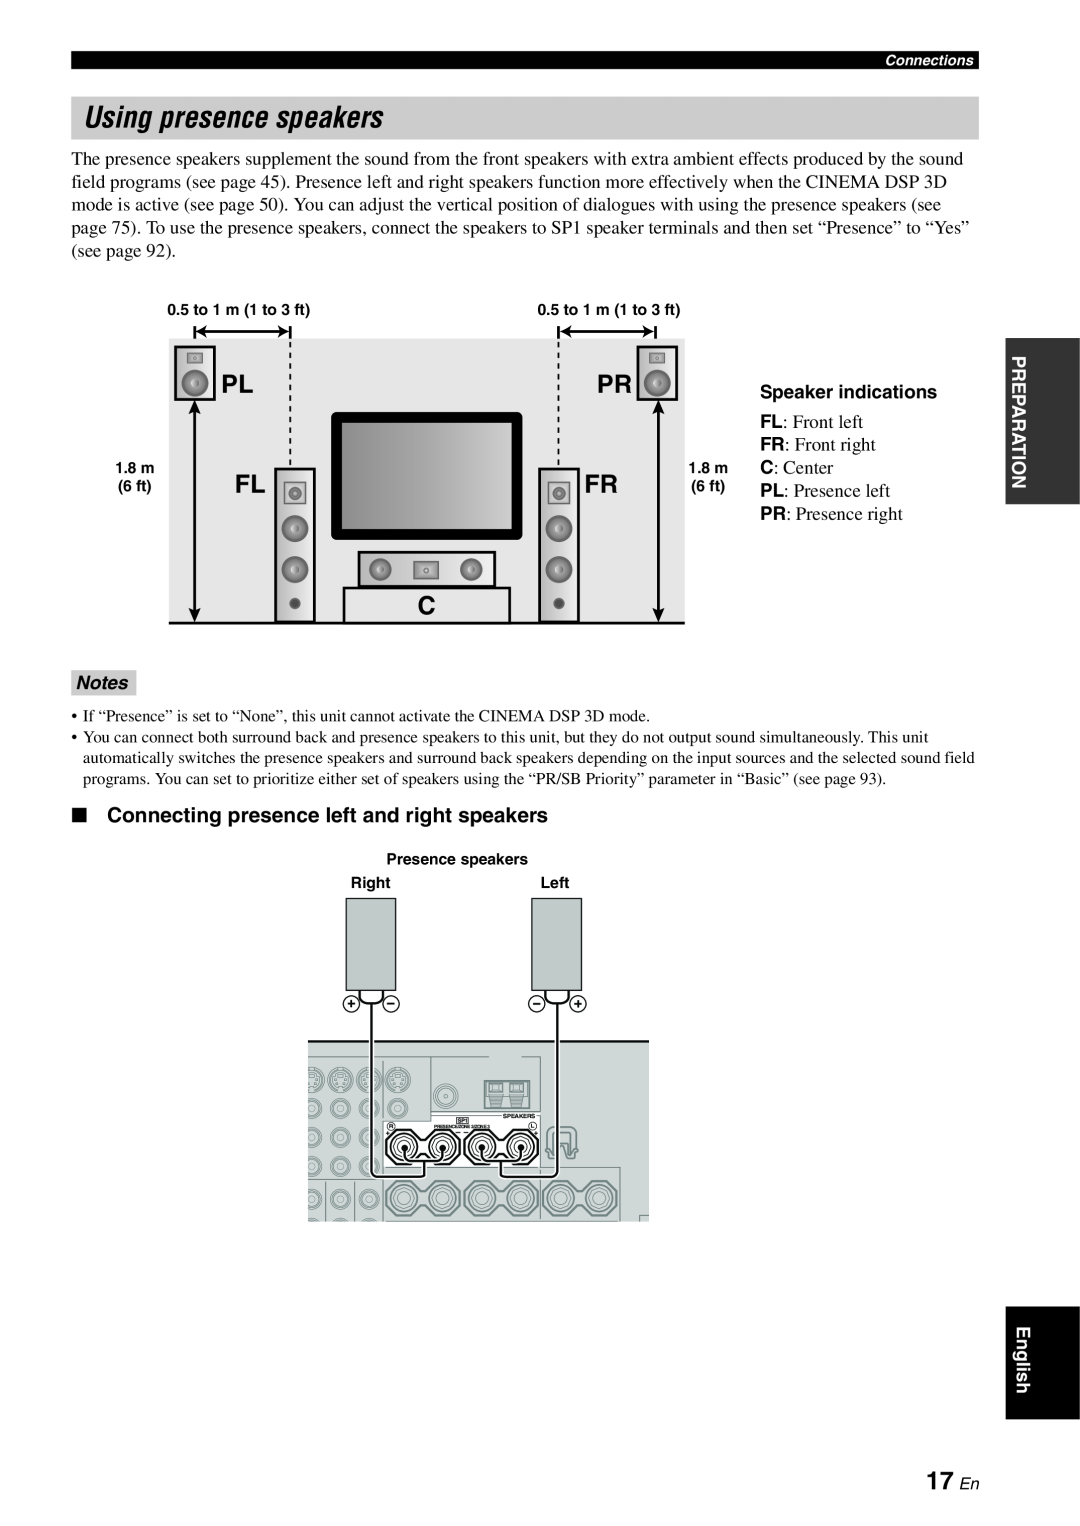 Yamaha RX-V3800 Using presence speakers, 17 En, Connecting presence left and right speakers, Speaker indications 